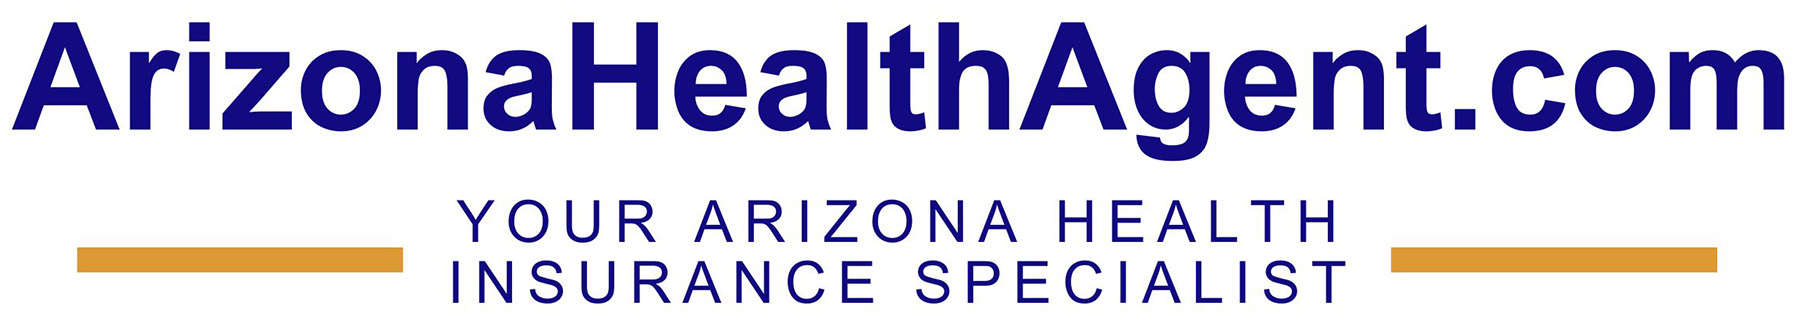 Arizona Health Agent logo